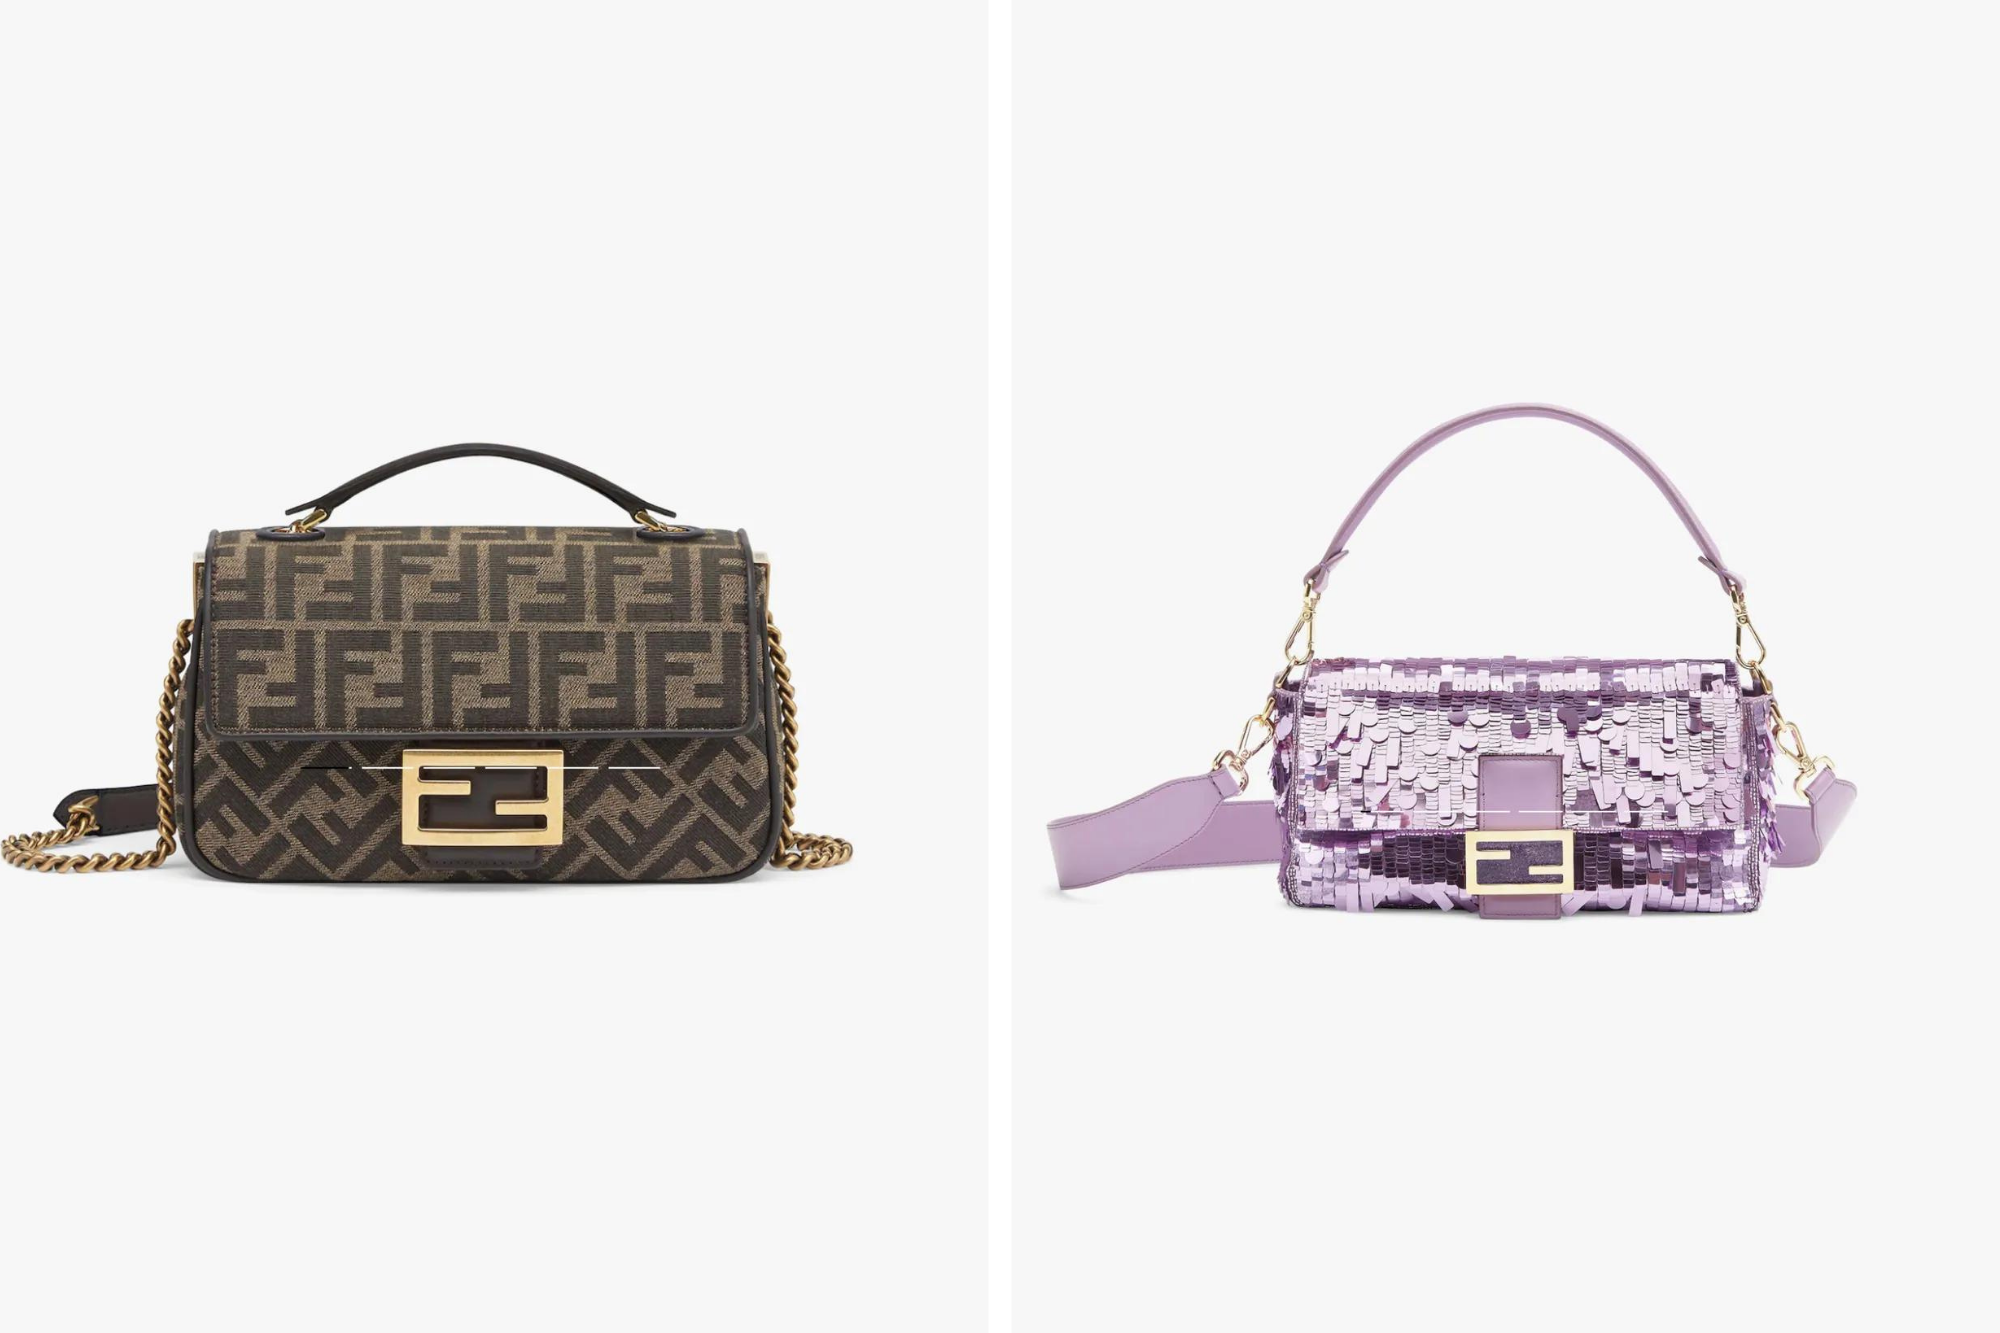 Resale value of Gucci, Chanel, Louis Vuitton handbags is falling - KESQ